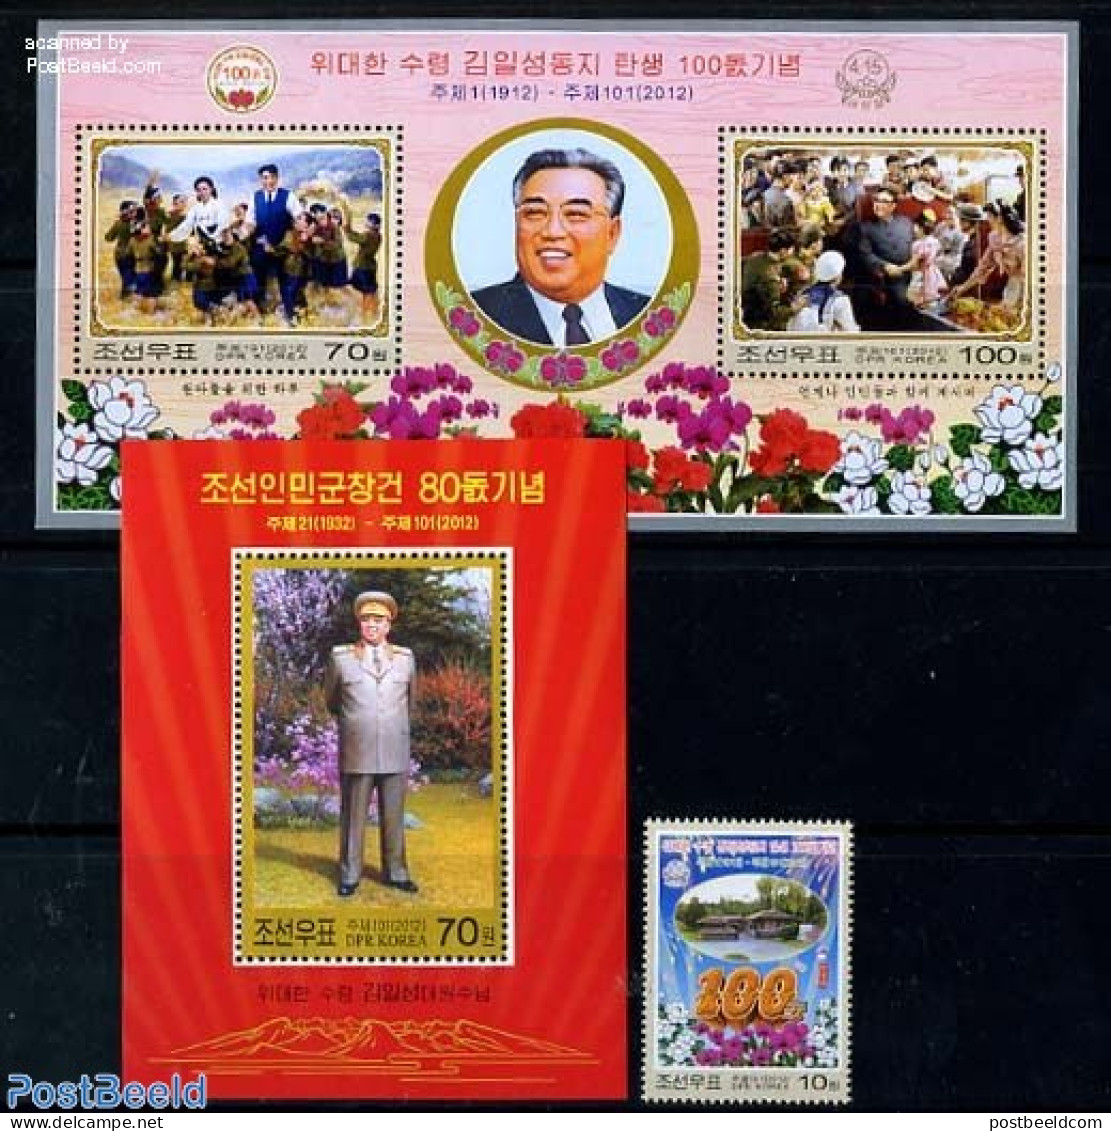 Korea, North 2012 Kim Il Sung 1v + 2 S/s, Mint NH, History - Corée Du Nord